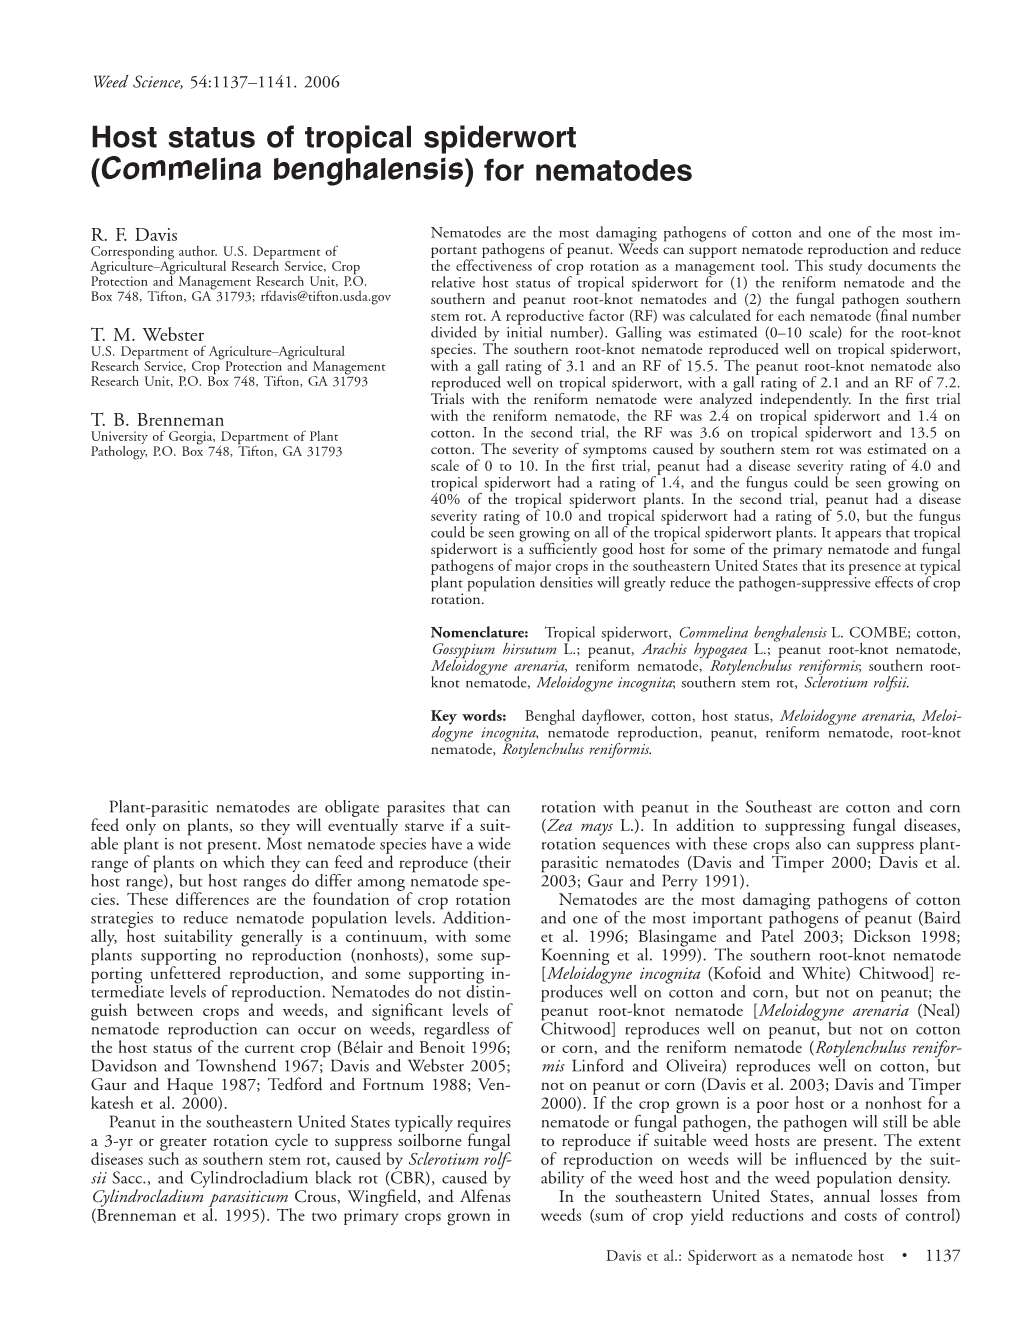 Host Status of Tropical Spiderwort (Commelina Benghalensis) for Nematodes